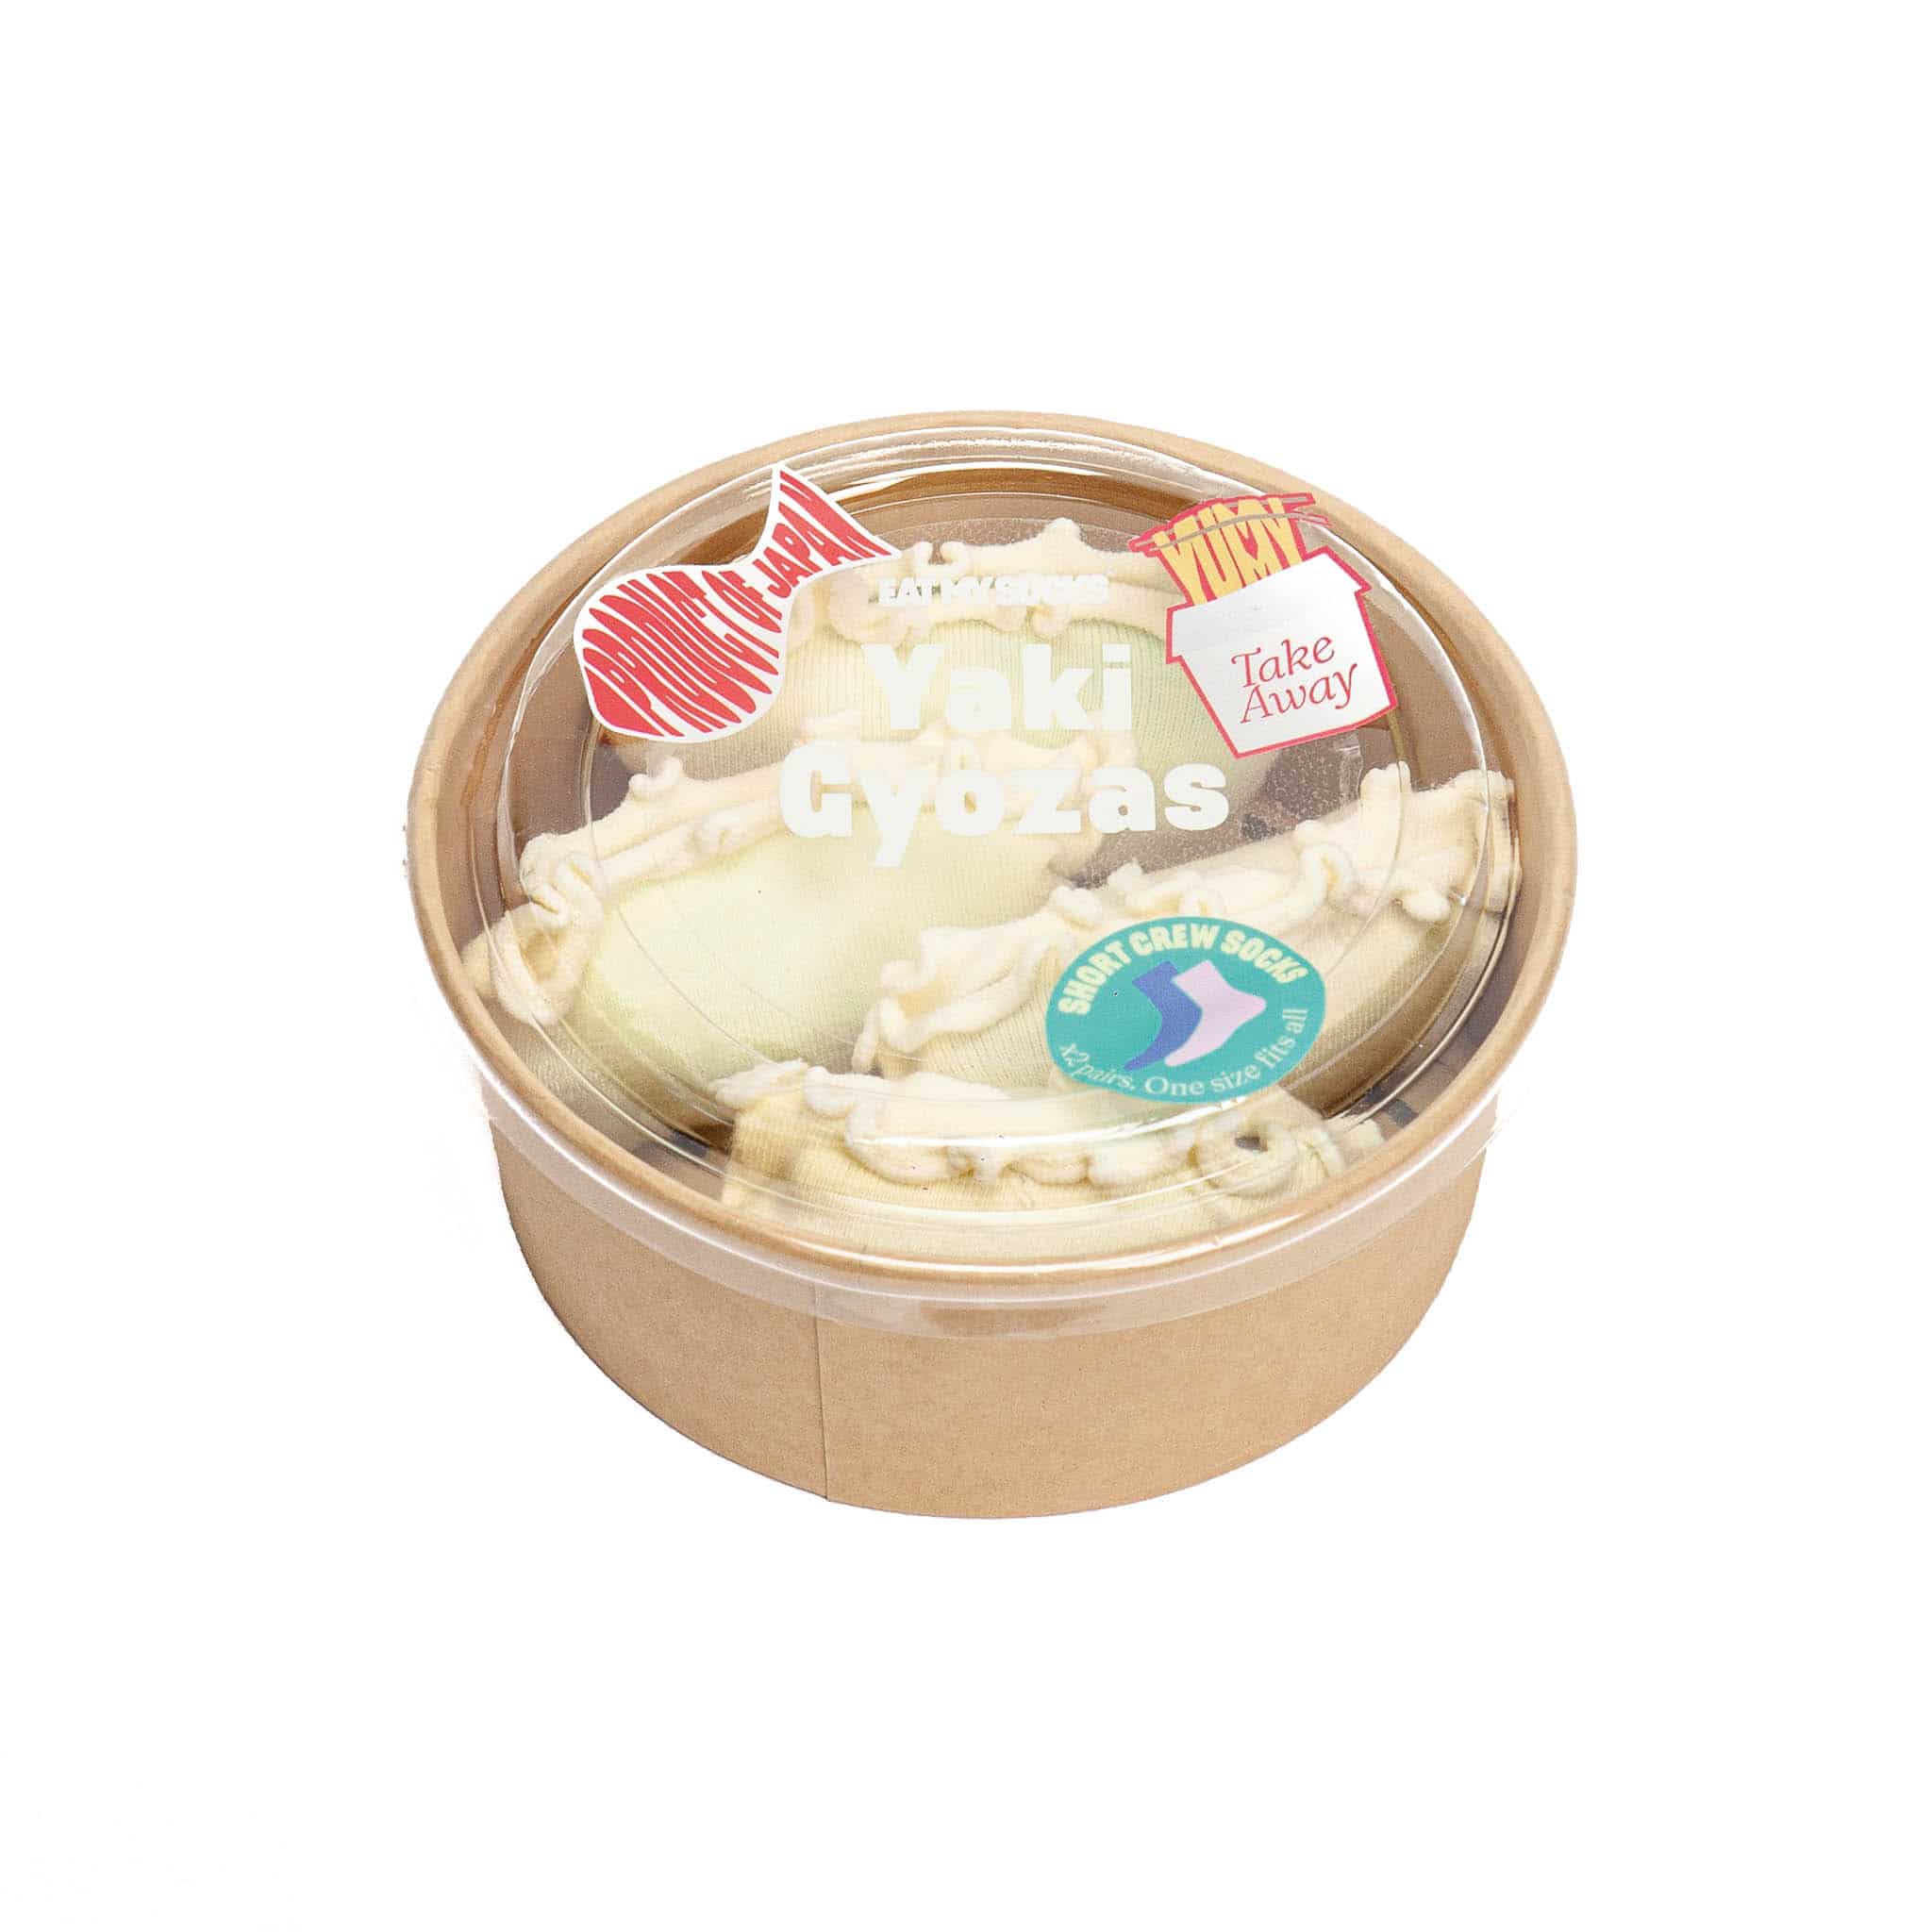 Shimomura Gyoza Shaping Mold Set (Japanese Dumplings Maker Kit